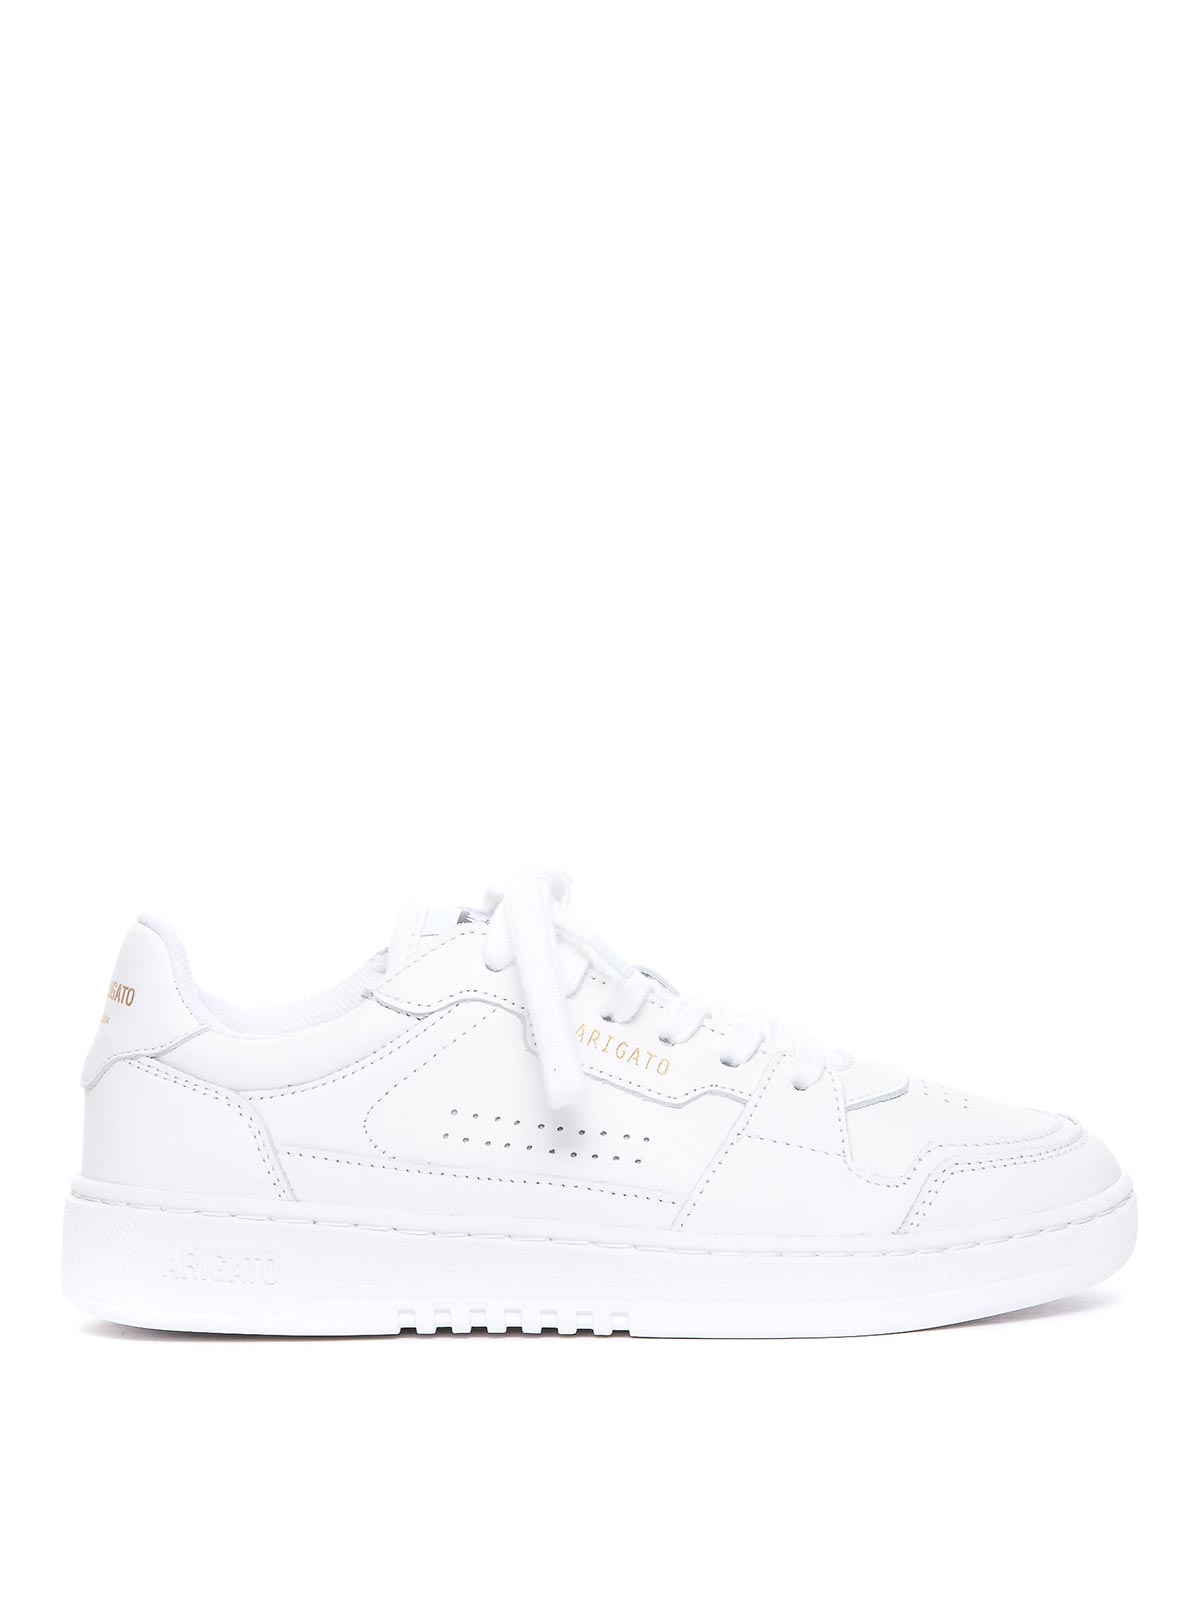 Shop Axel Arigato Says The Sneakerhead In White